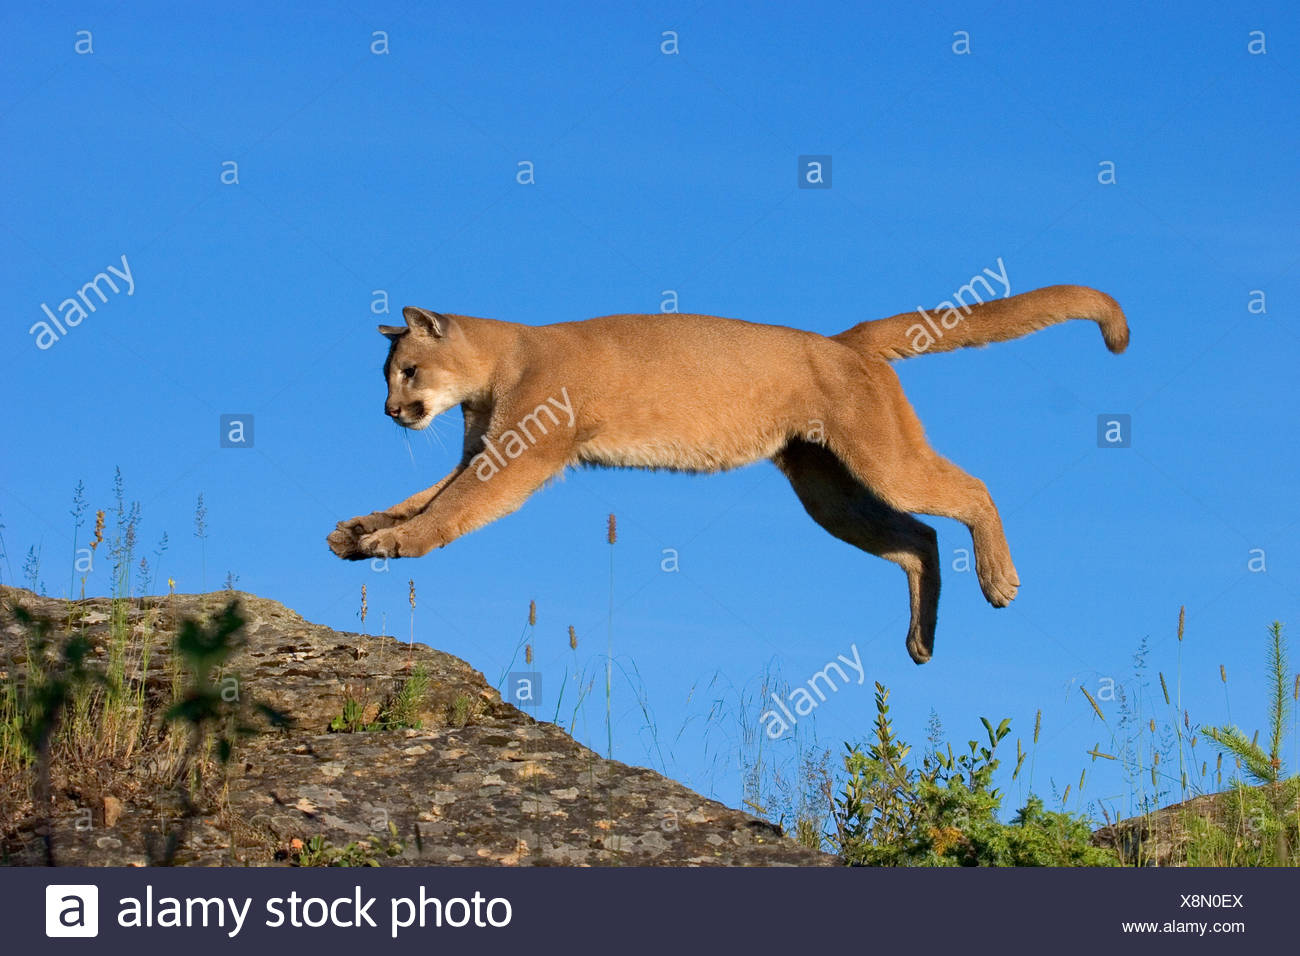 puma animal jumping